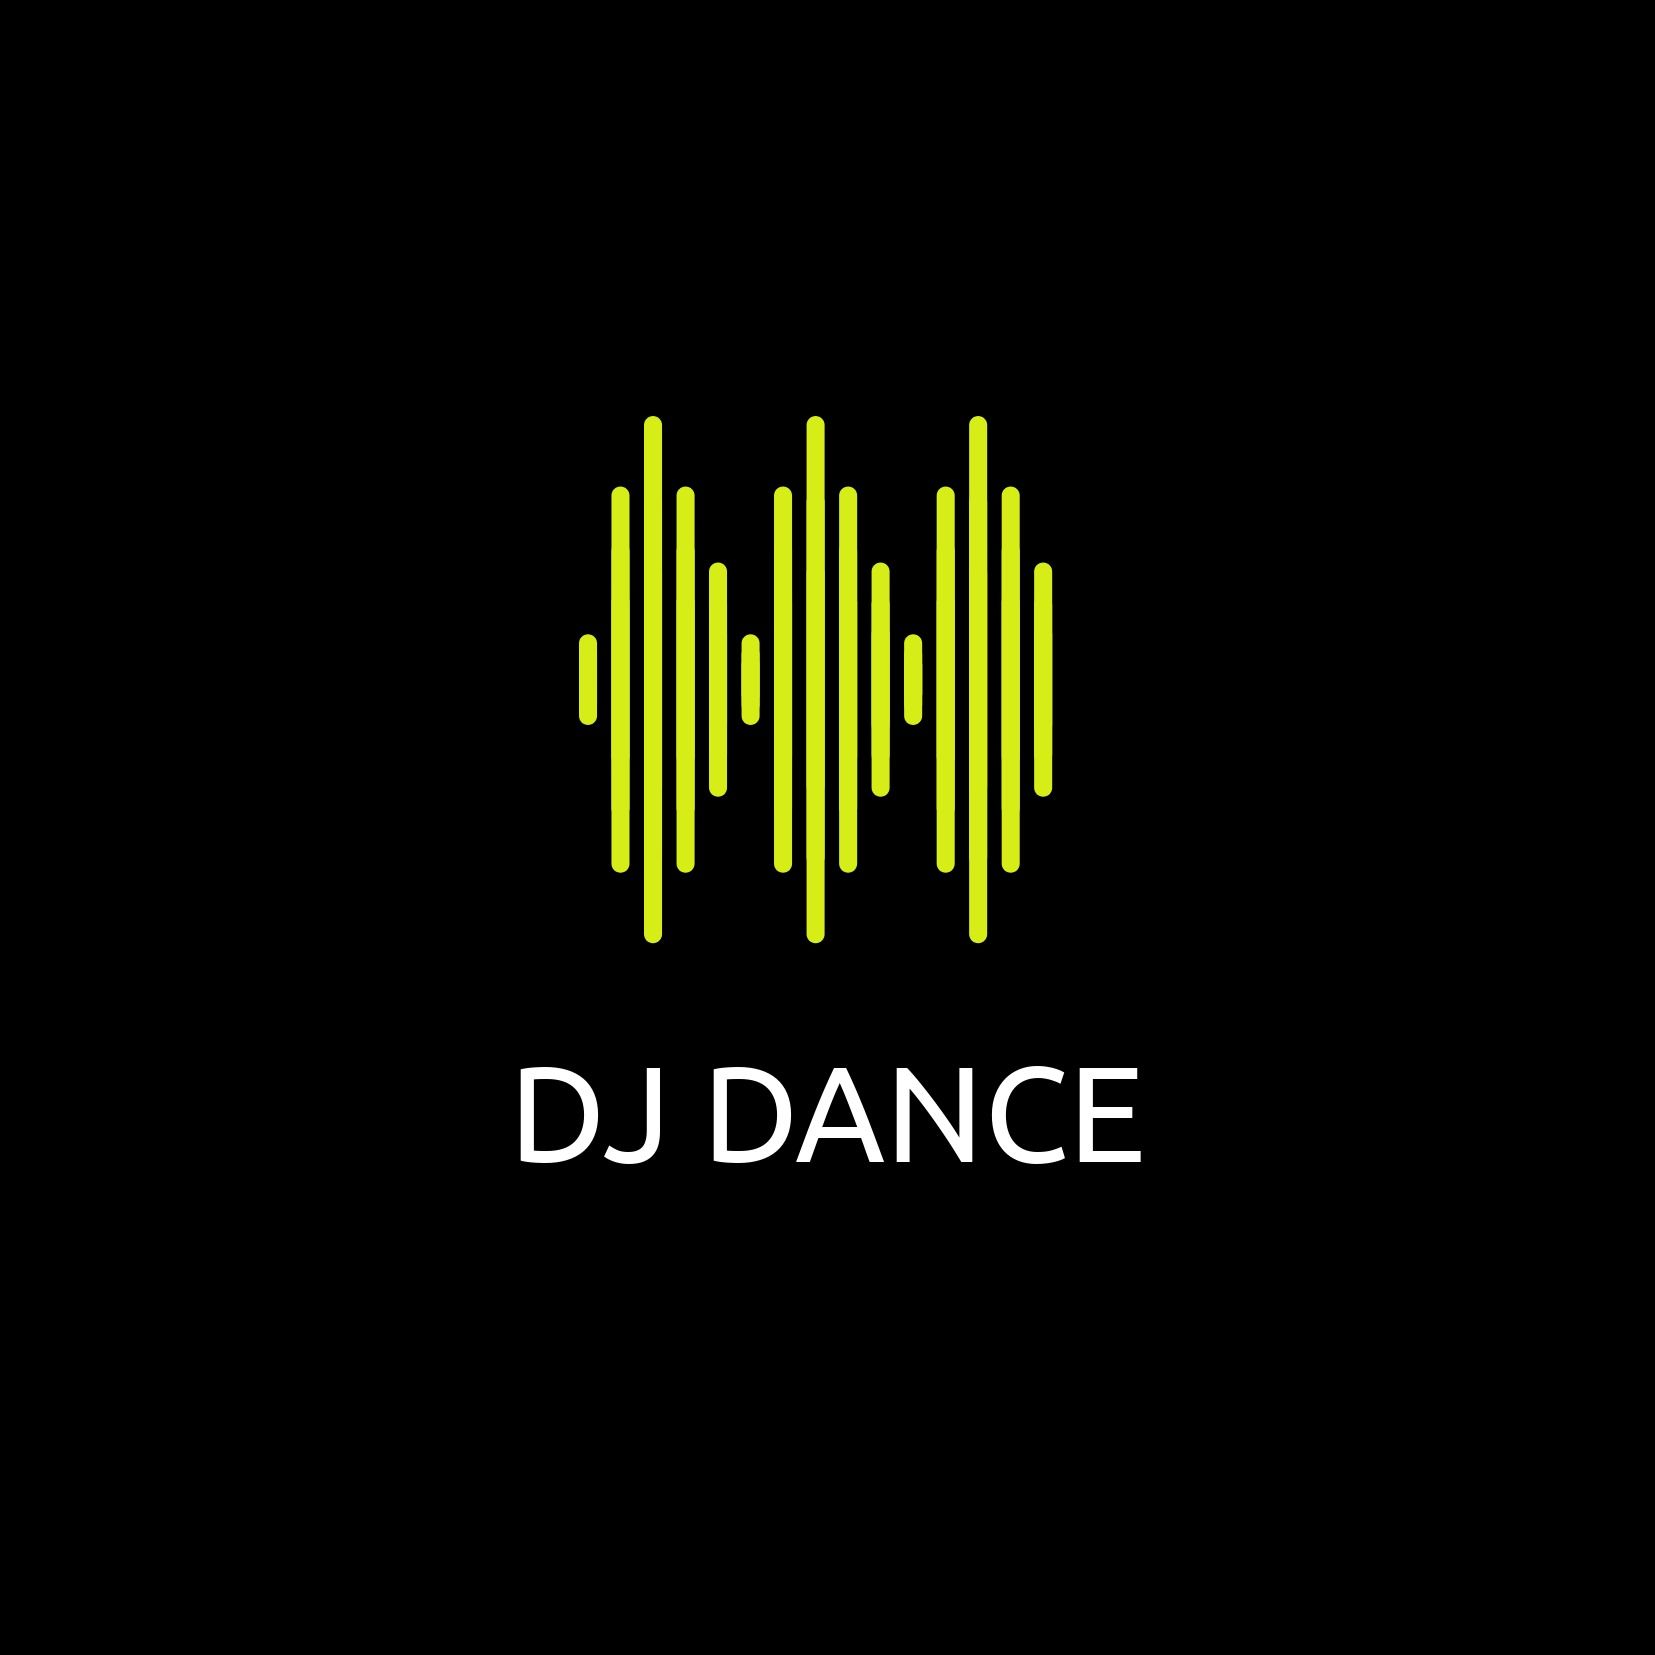 DJ Dance Creative Logo Designs - A step-by-step guide to creative logo design - Image